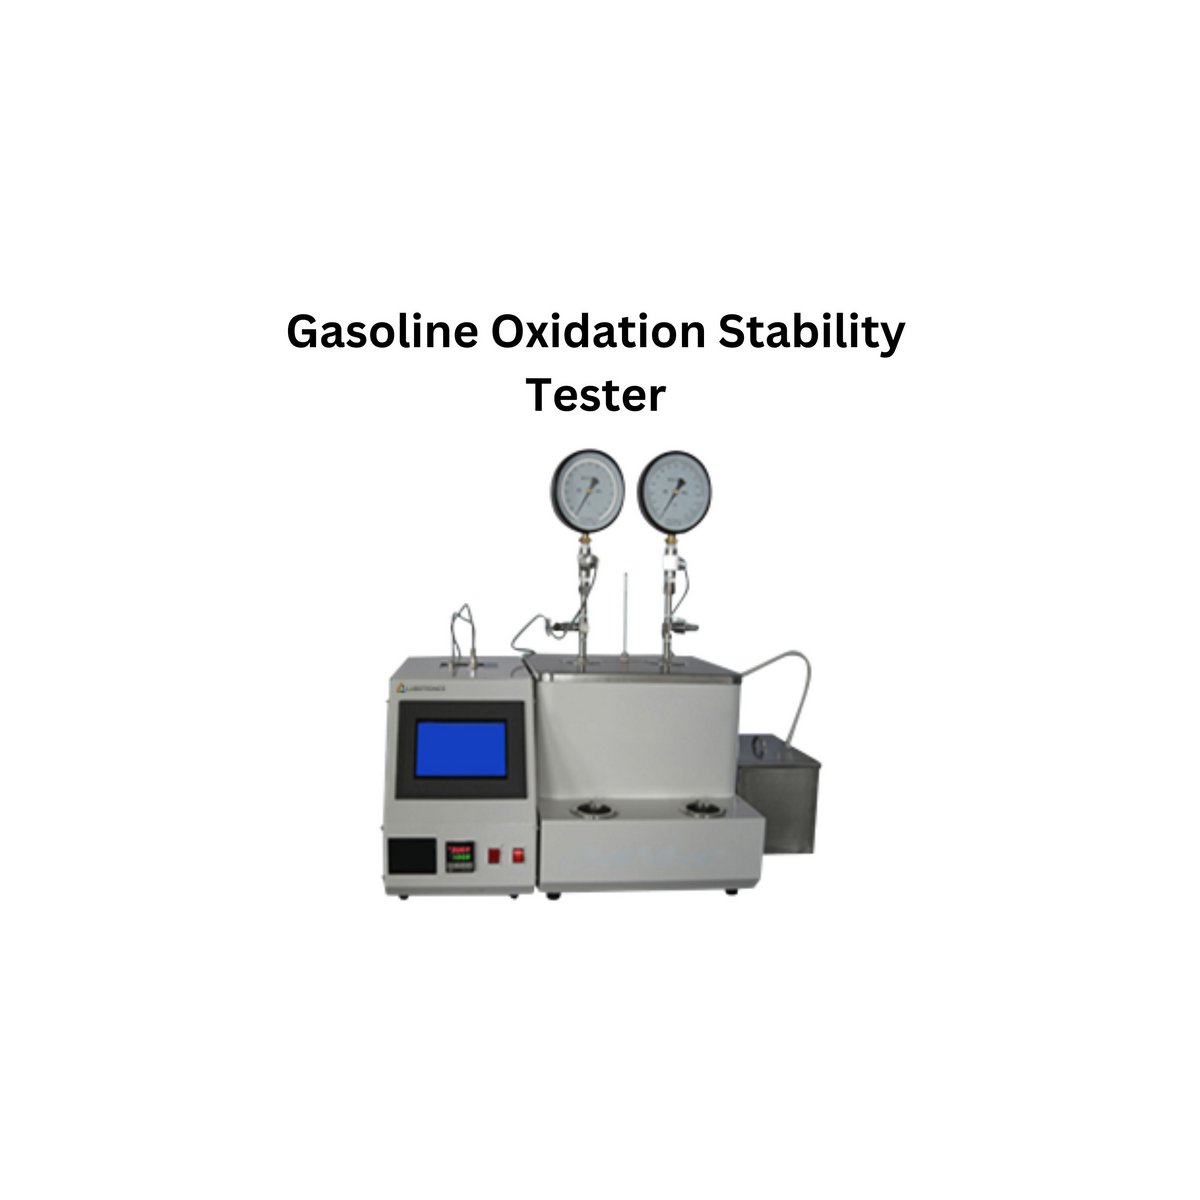 Gasoline Oxidation Stability Tester.jpg